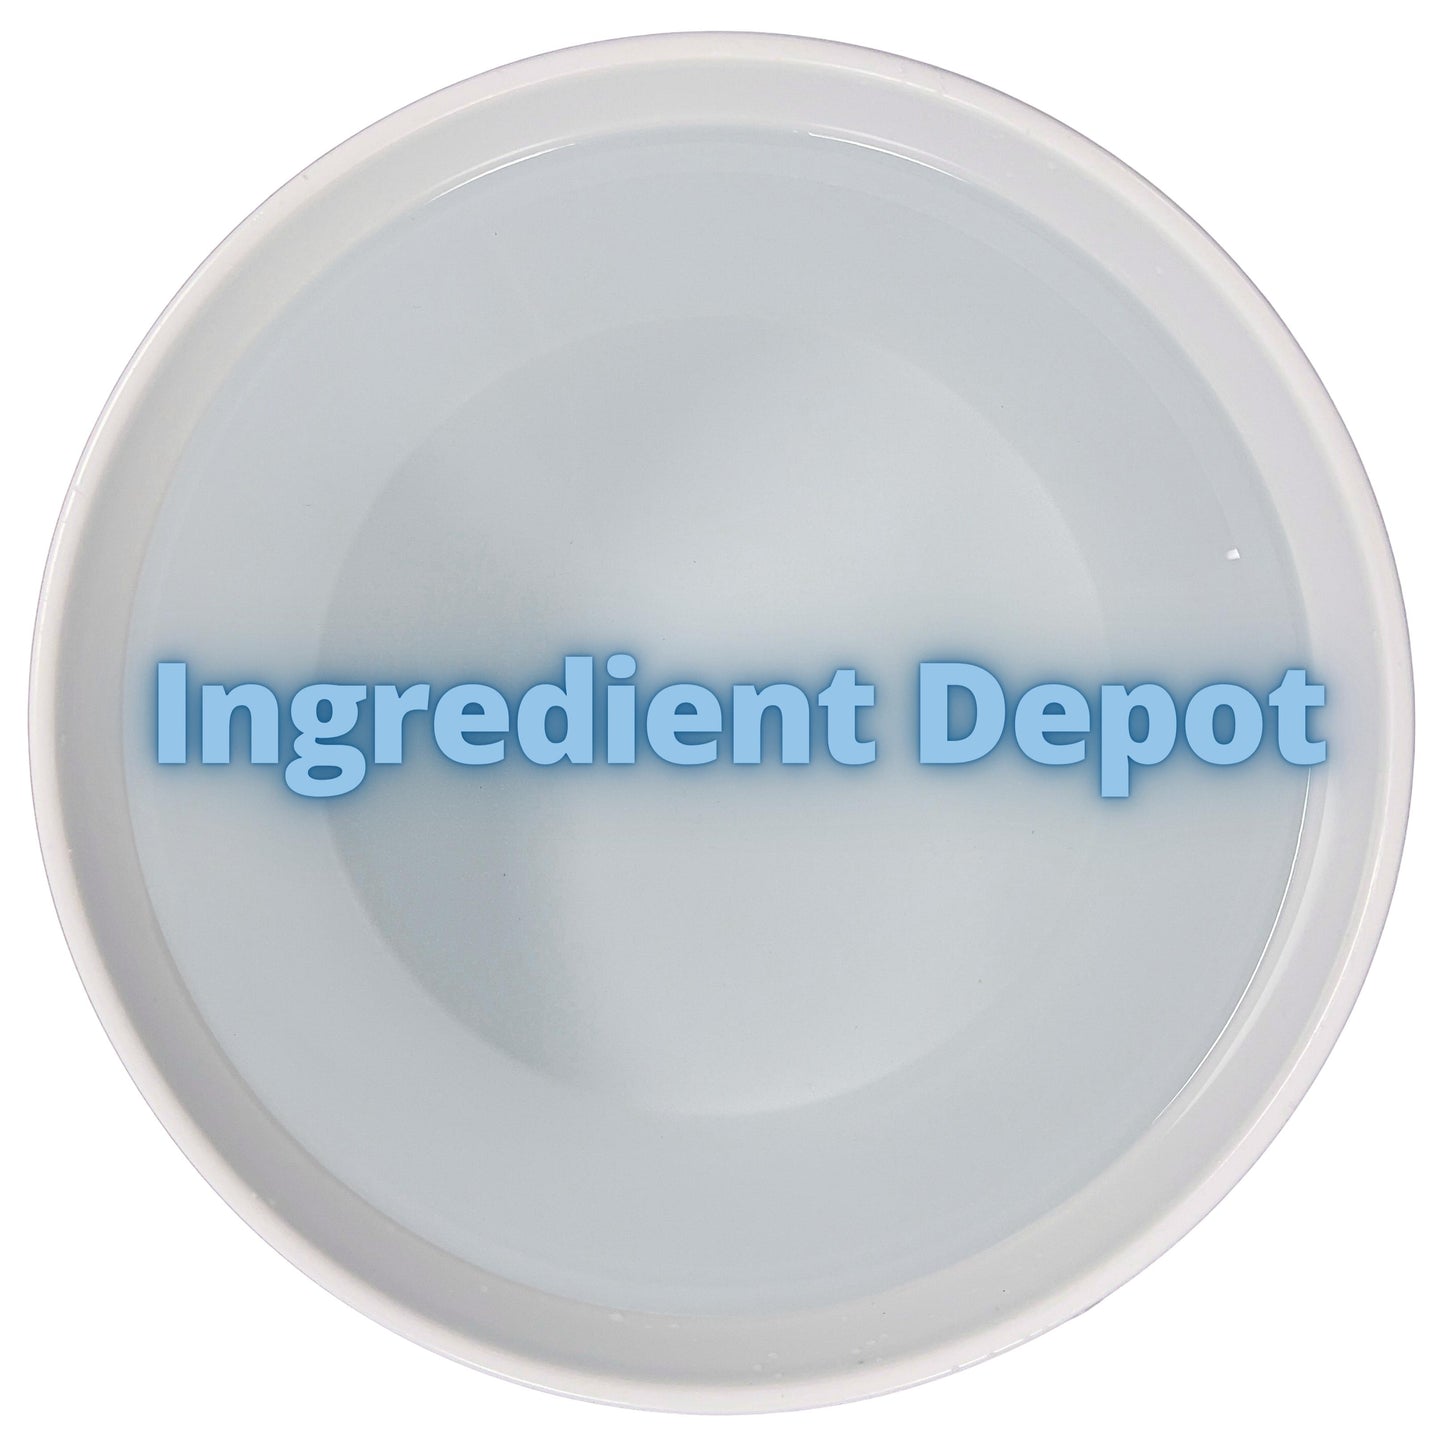 Propylene Glycol 99.9% USP/EP Grade 12 x 20 litres - IngredientDepot.com